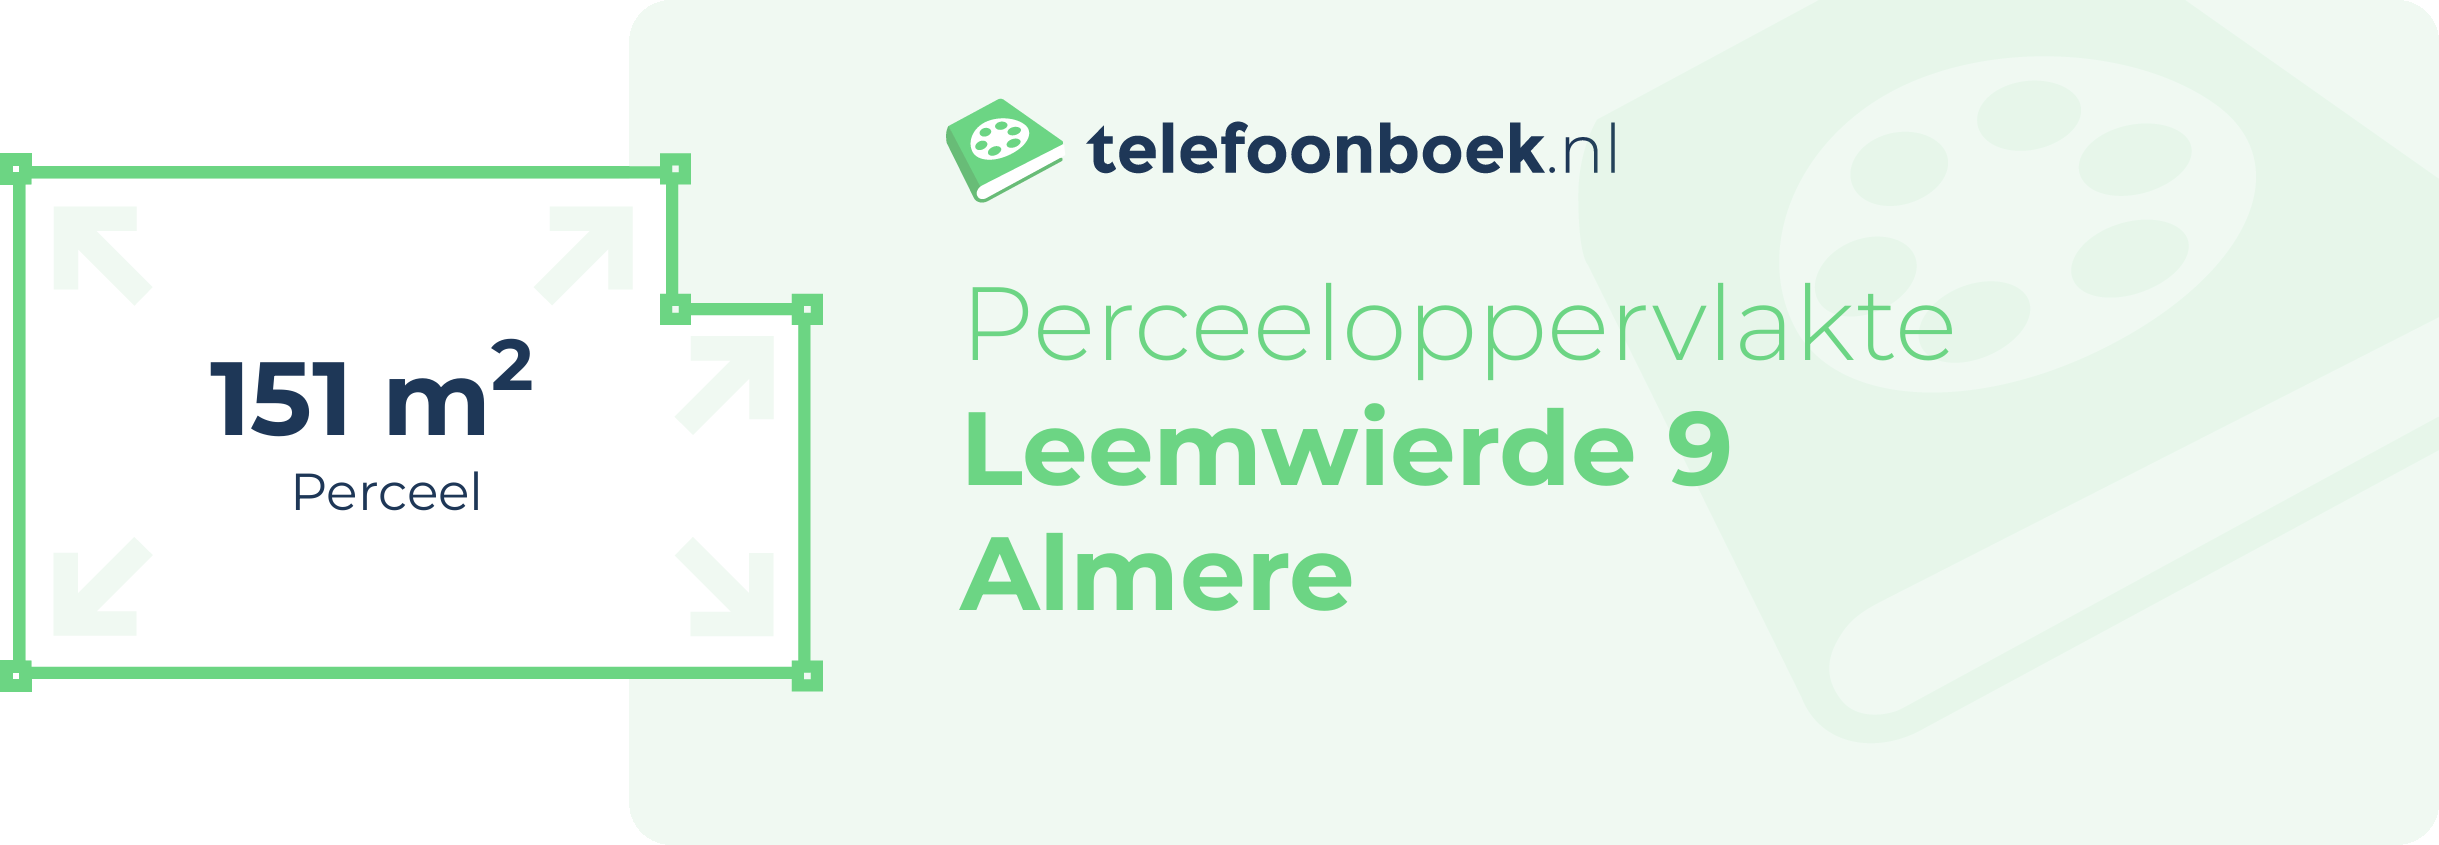 Perceeloppervlakte Leemwierde 9 Almere